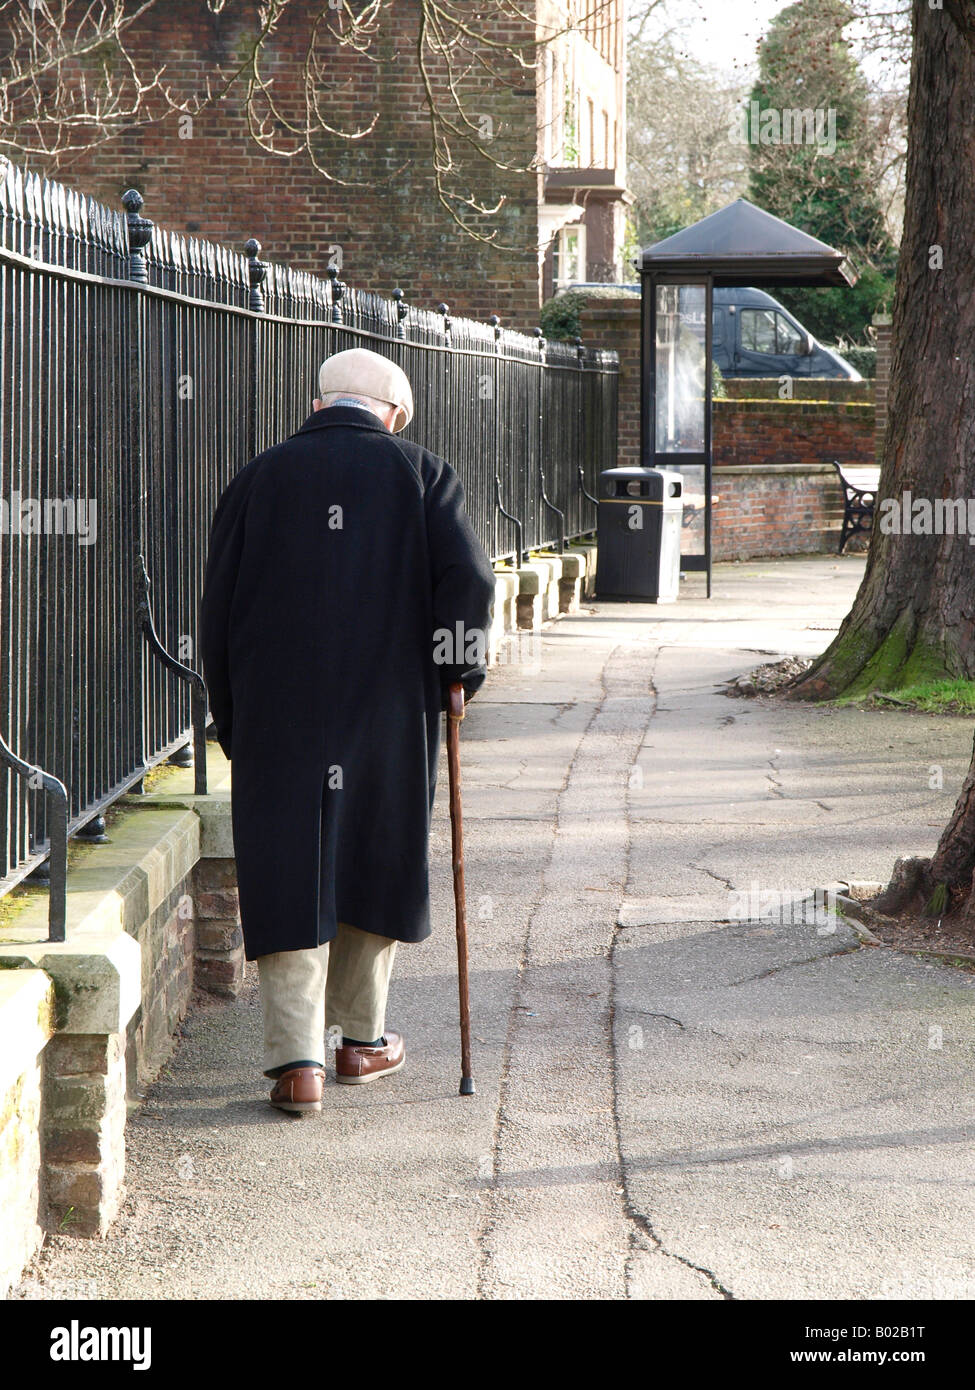 Elderly man walking in an urban environment Stock Photo - Alamy